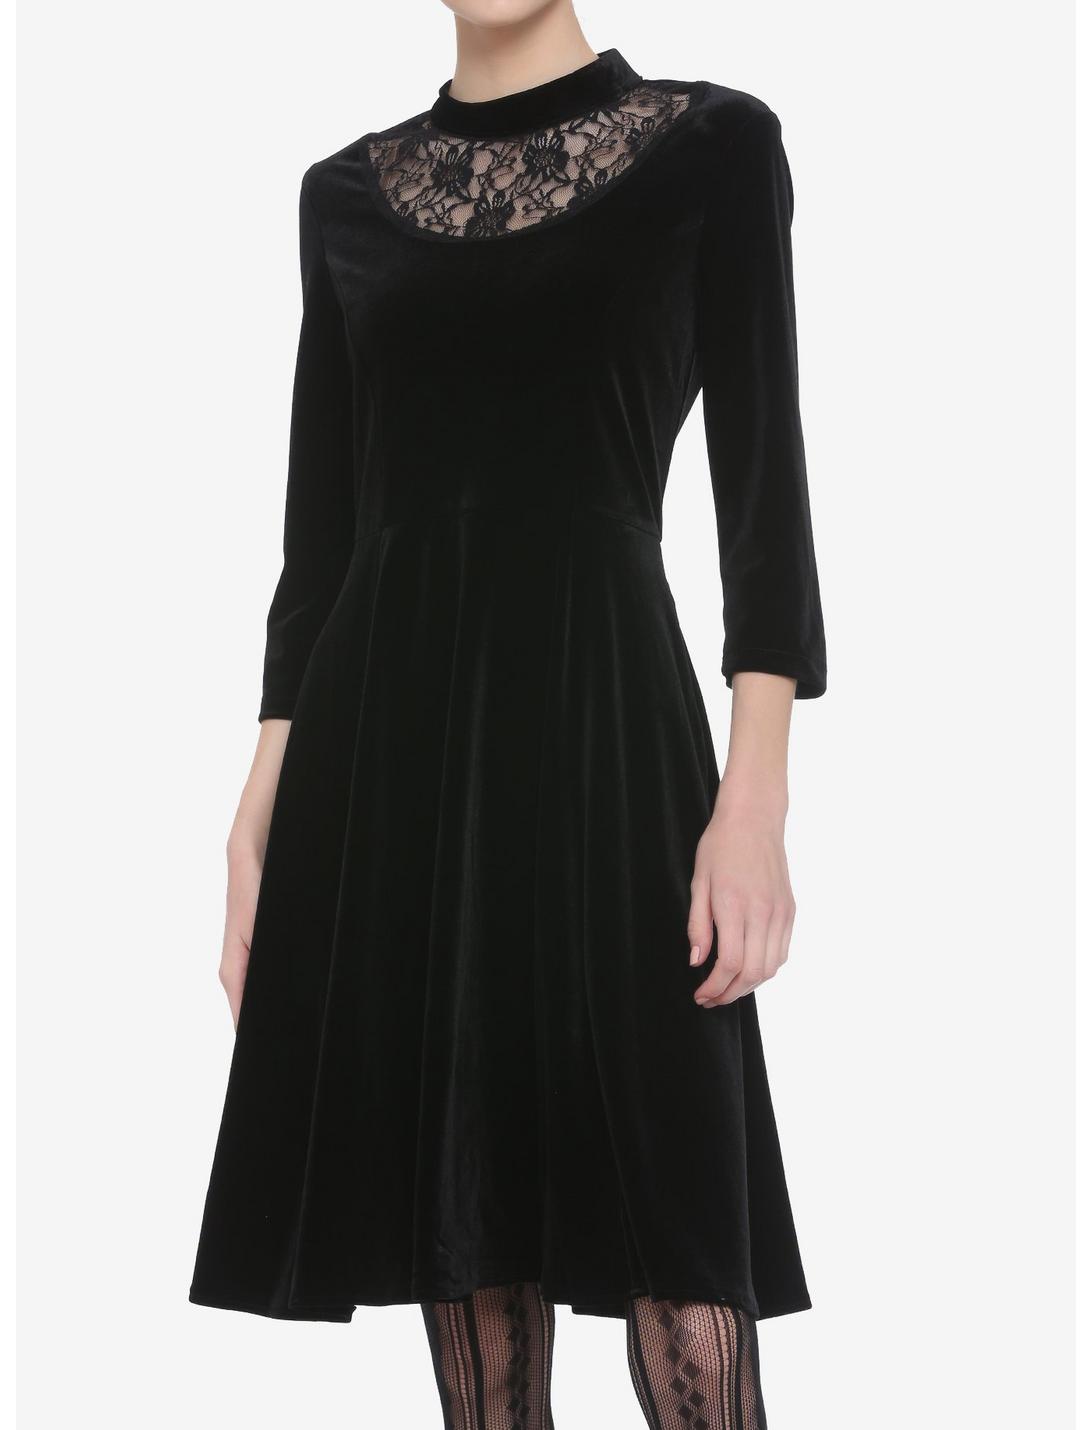 Lace Neck Velvet Long-Sleeve Dress, BLACK, hi-res